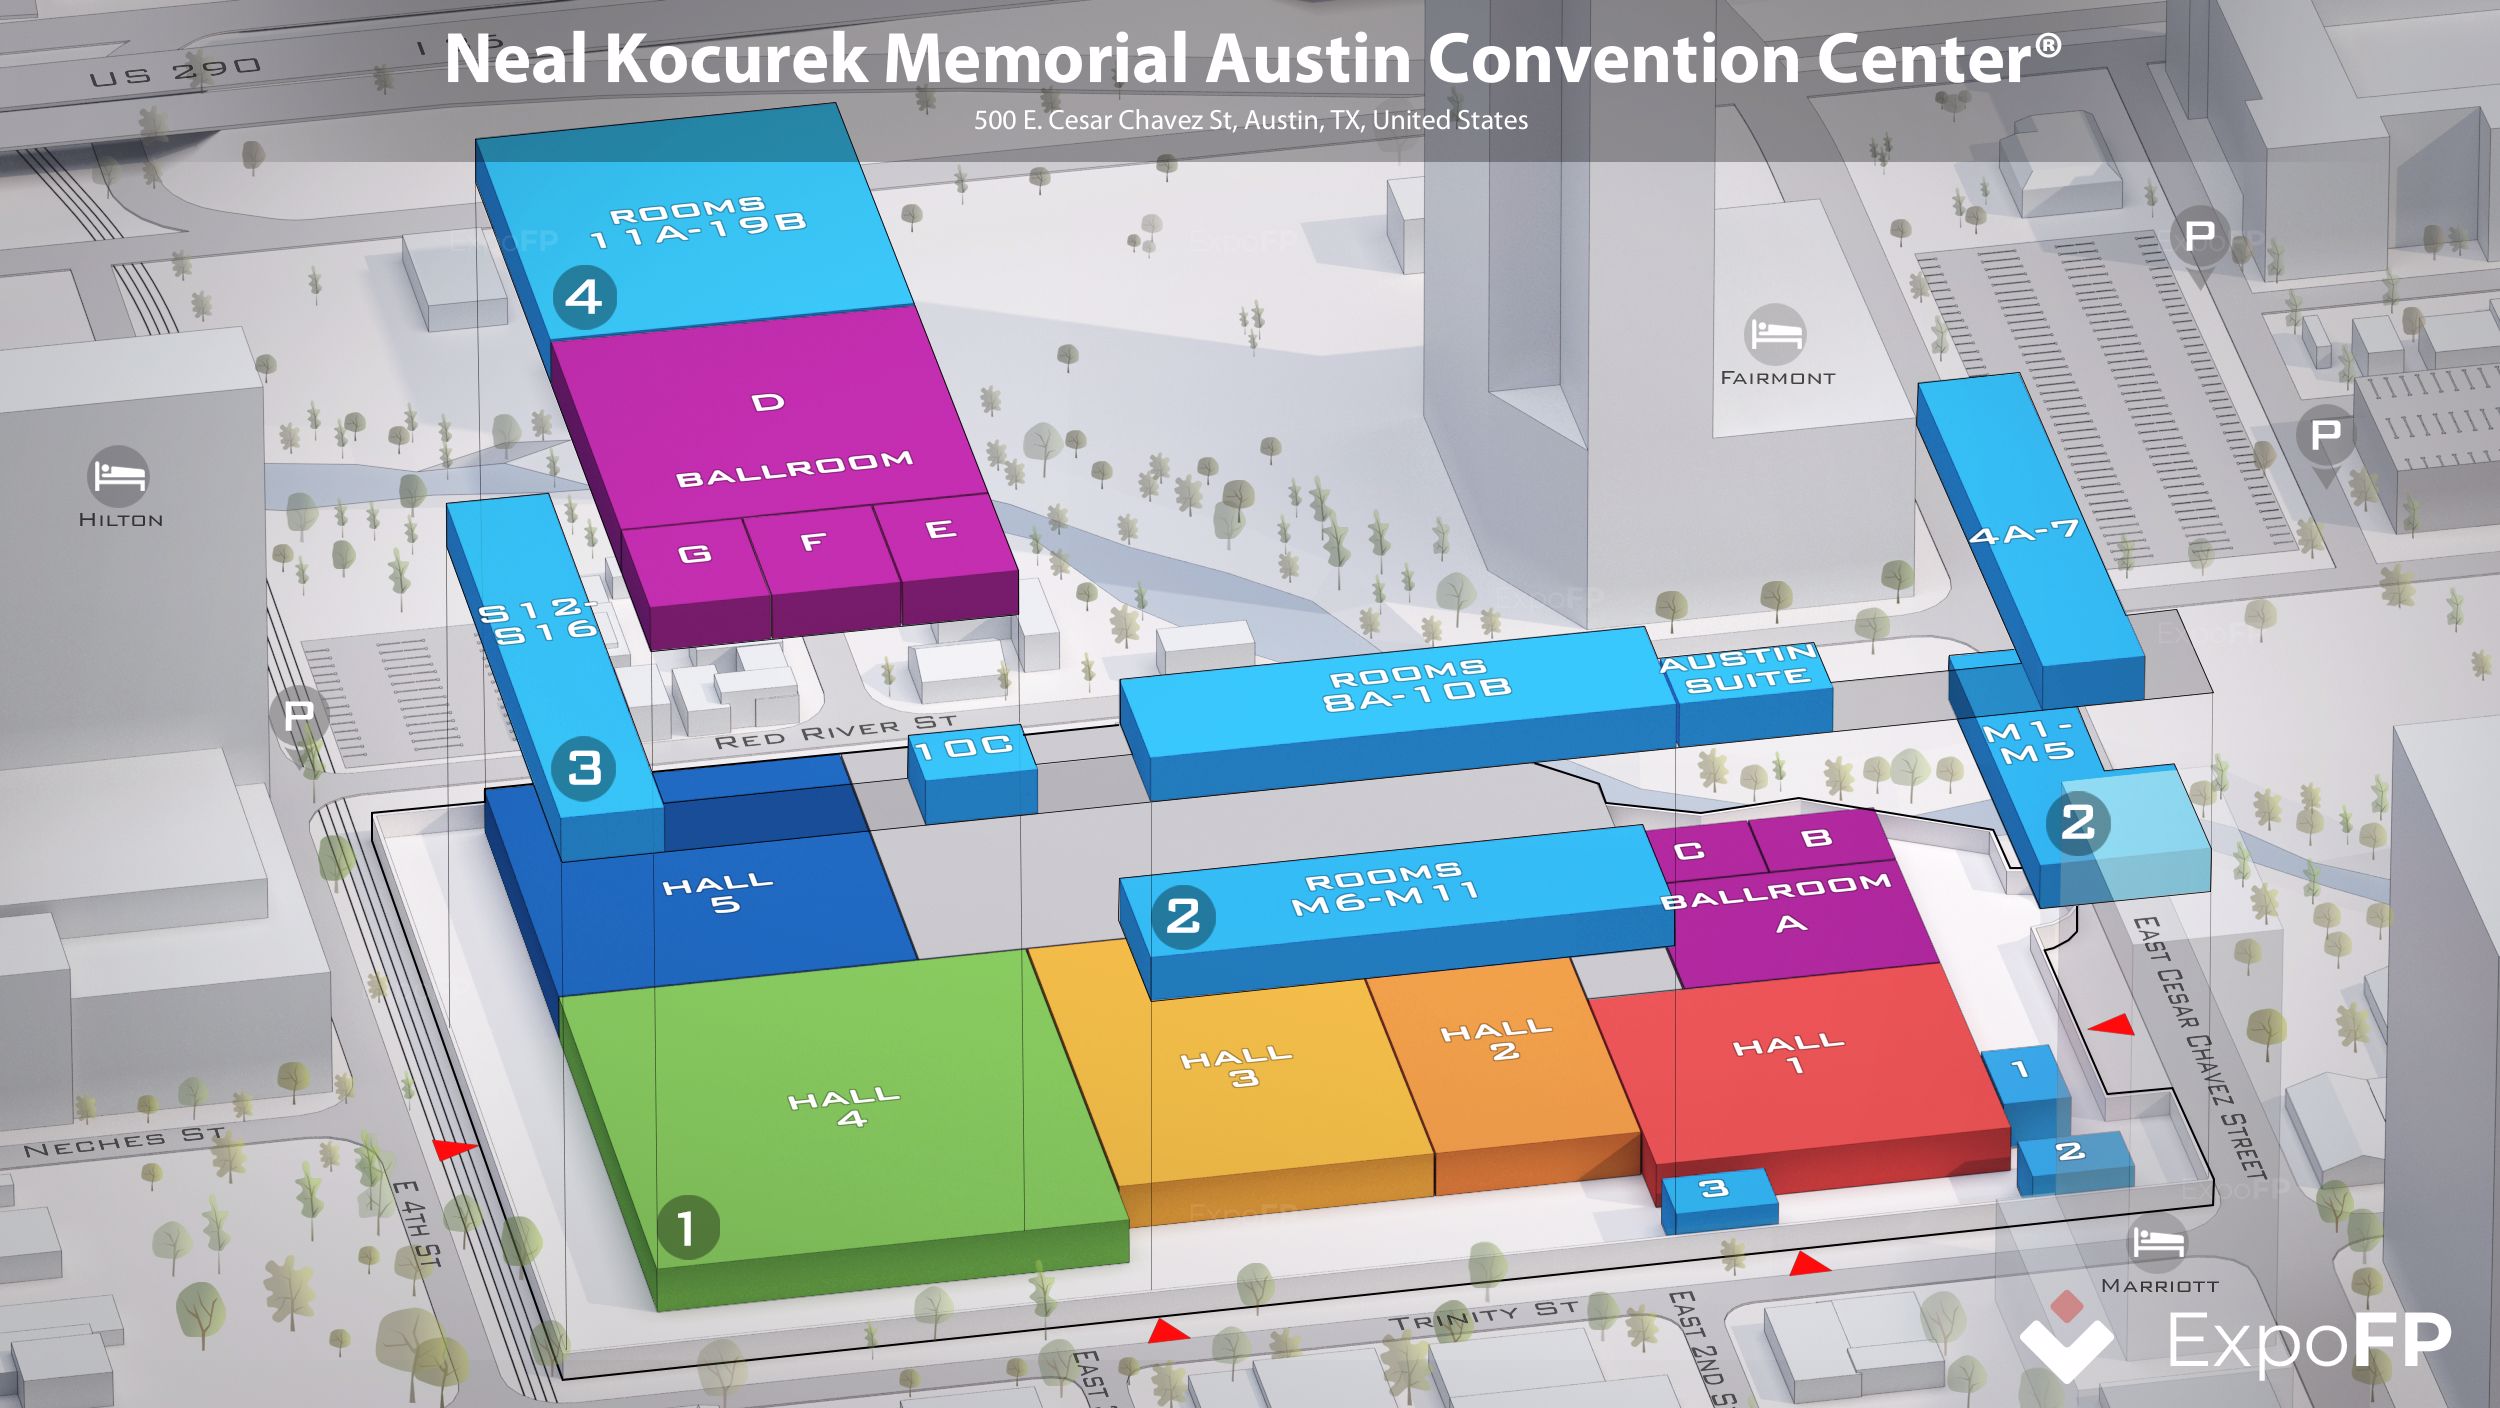 Neal Kocurek Memorial Austin Convention Center floor plan